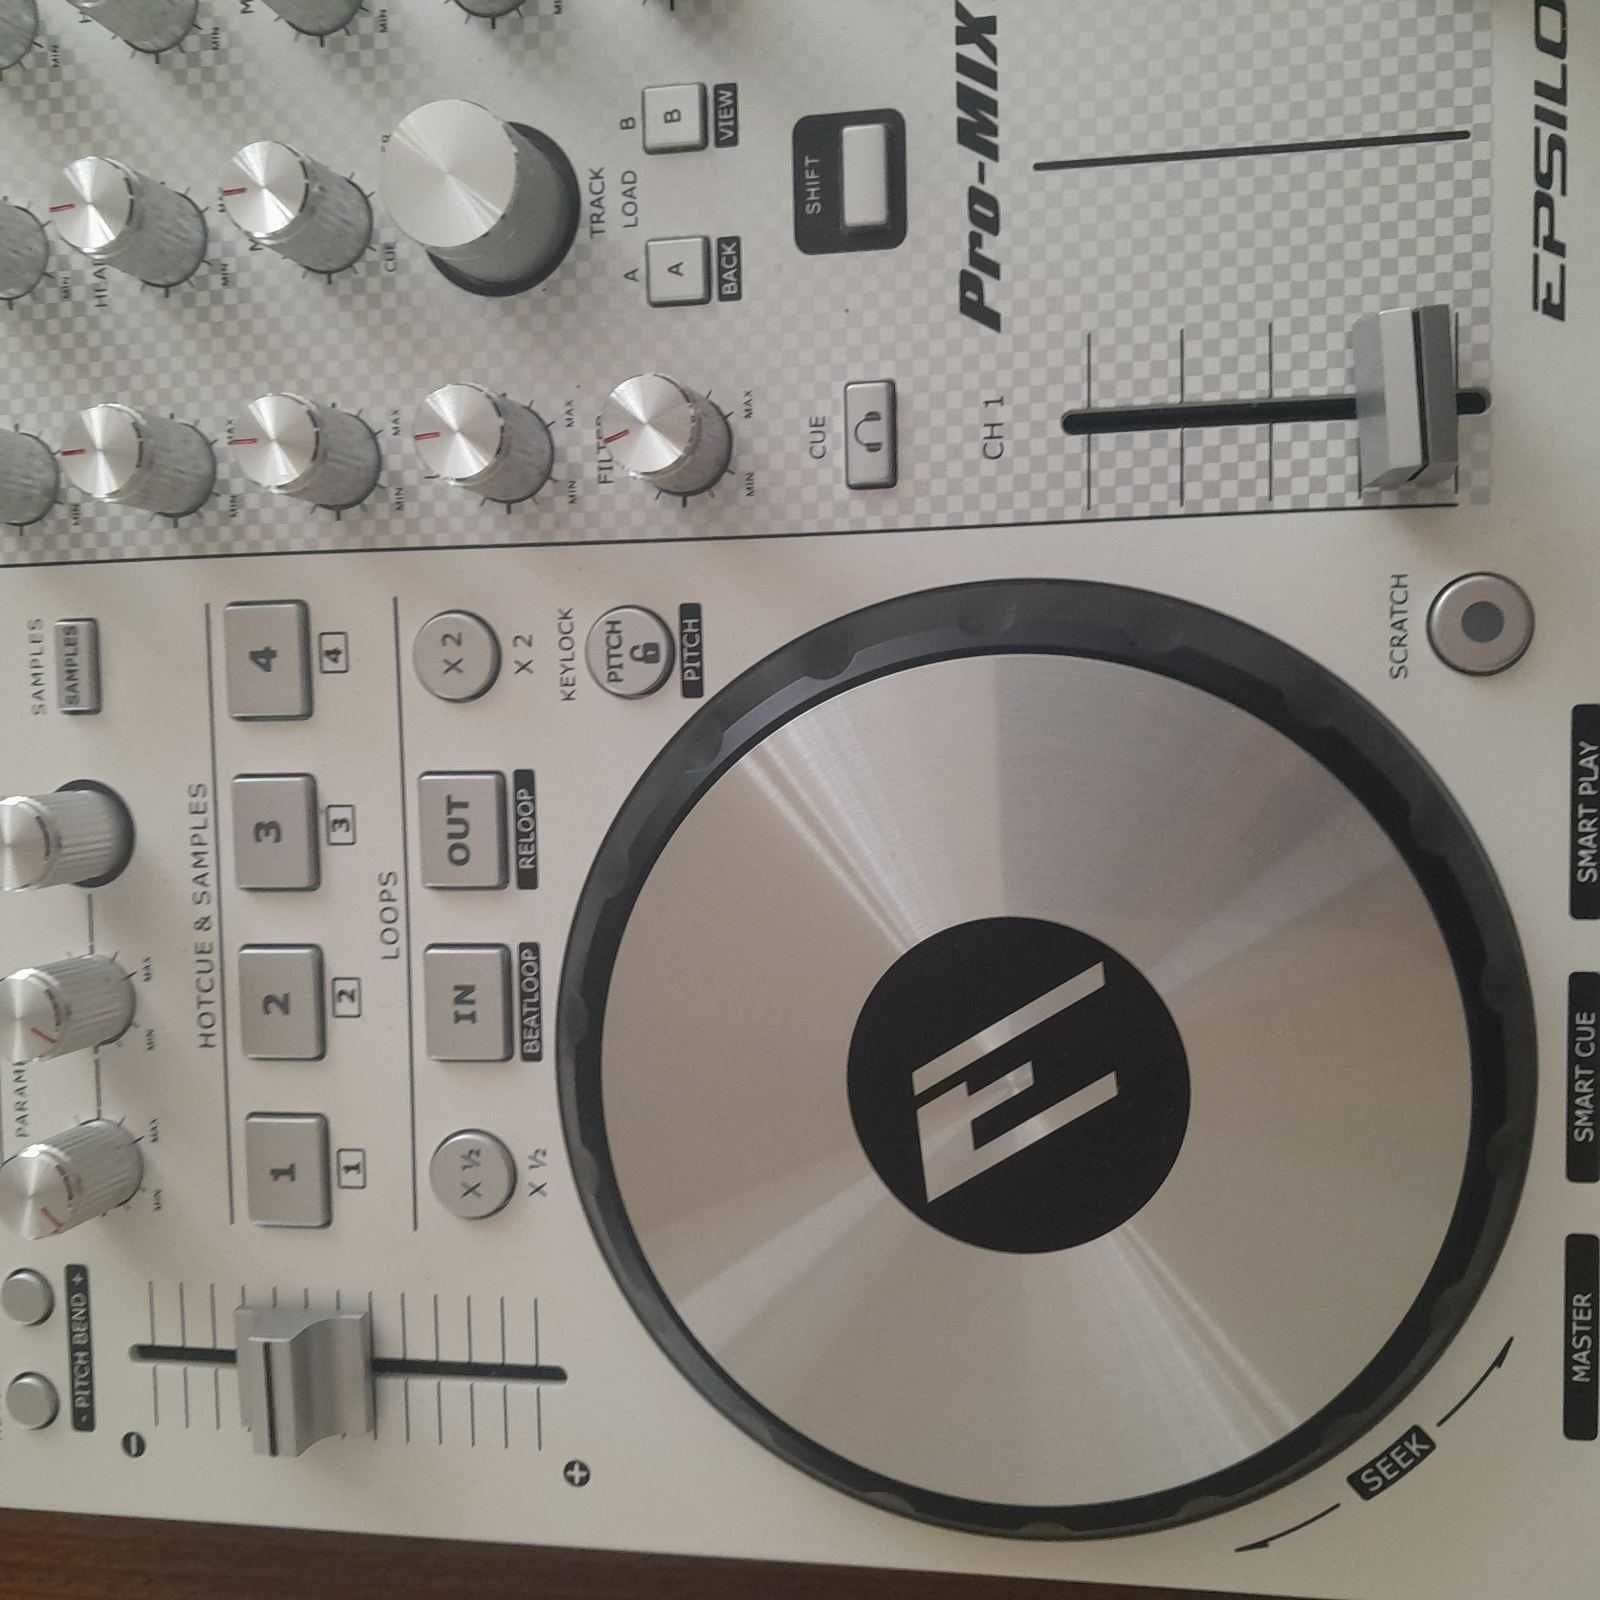 Epsilon Pro-Mix2 (White) Ultra-compact 2-Deck Professional MIDI/USB DJ